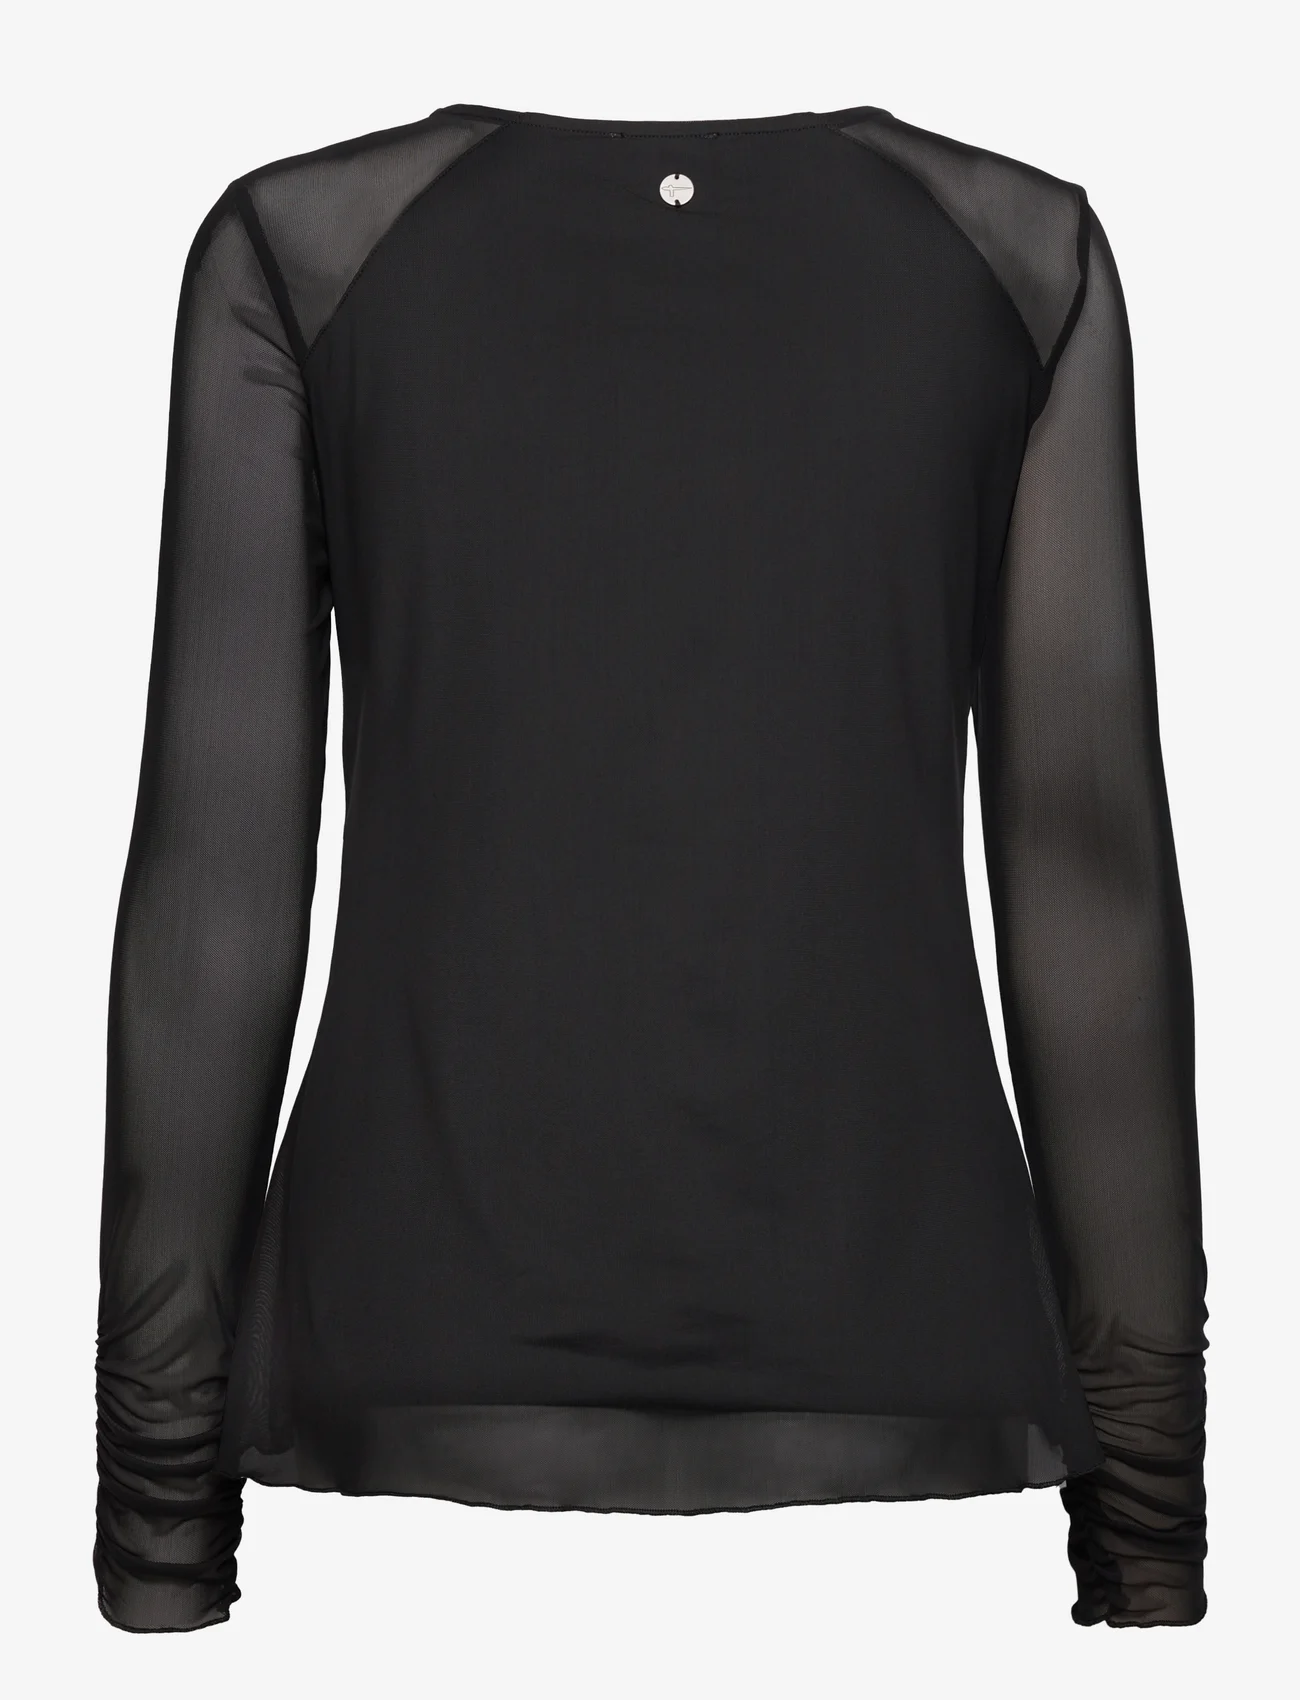 Tamaris Apparel - CAGE Long sleeve Mesh Shirt - langærmede toppe - black beauty - 1